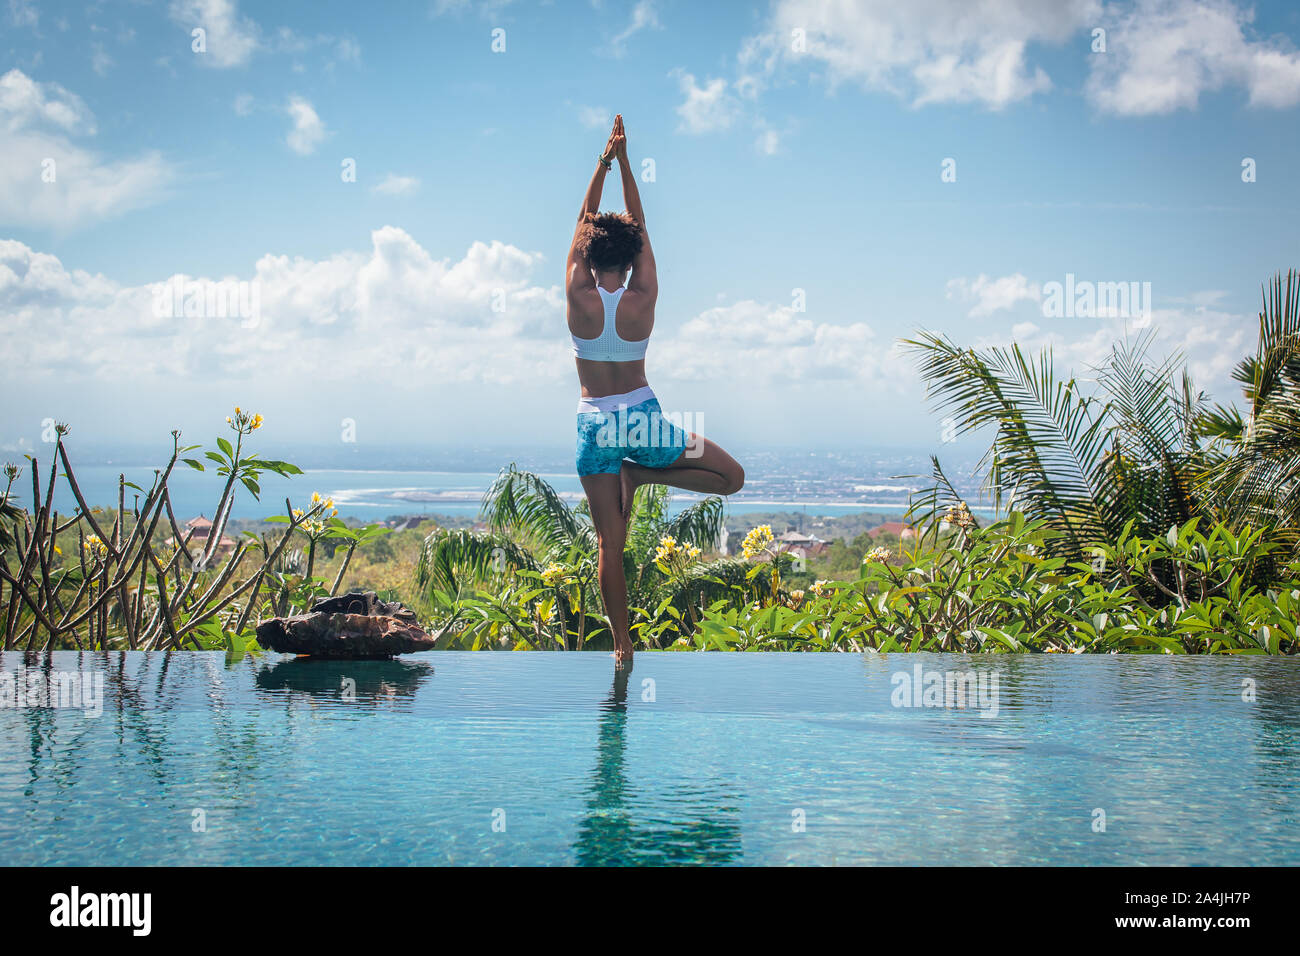 Junge Frau Yoga pose Asana am Rande der Infinity Pool mit atemberaubendem Blick auf die Villa in Bali Stockfoto